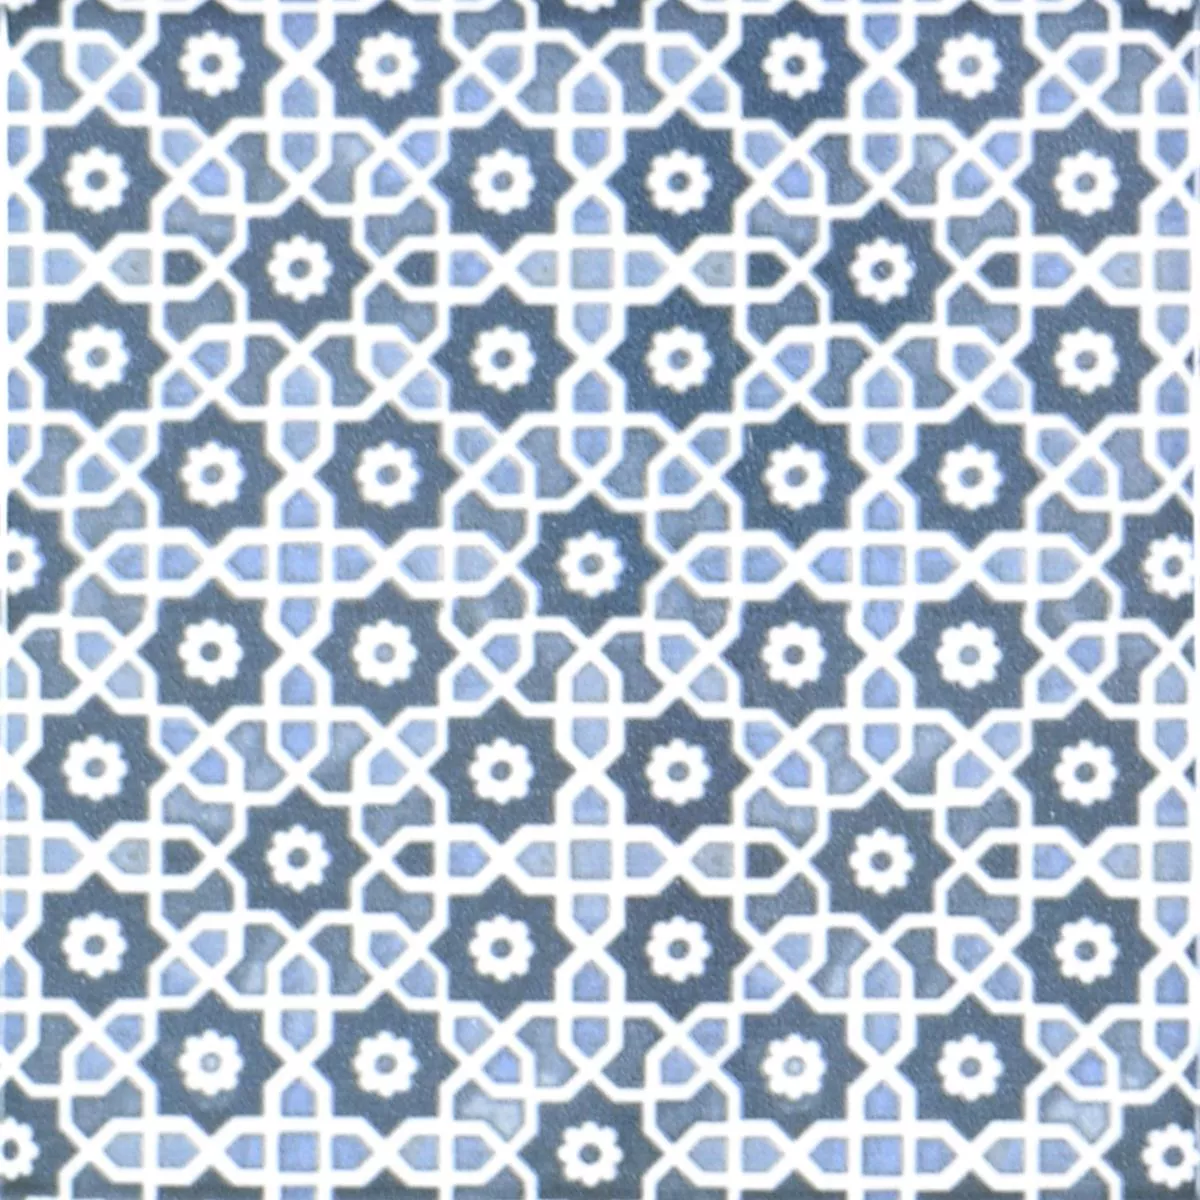 Sample Ceramic Mosaic Tiles Daymion Retro Optic Blue 